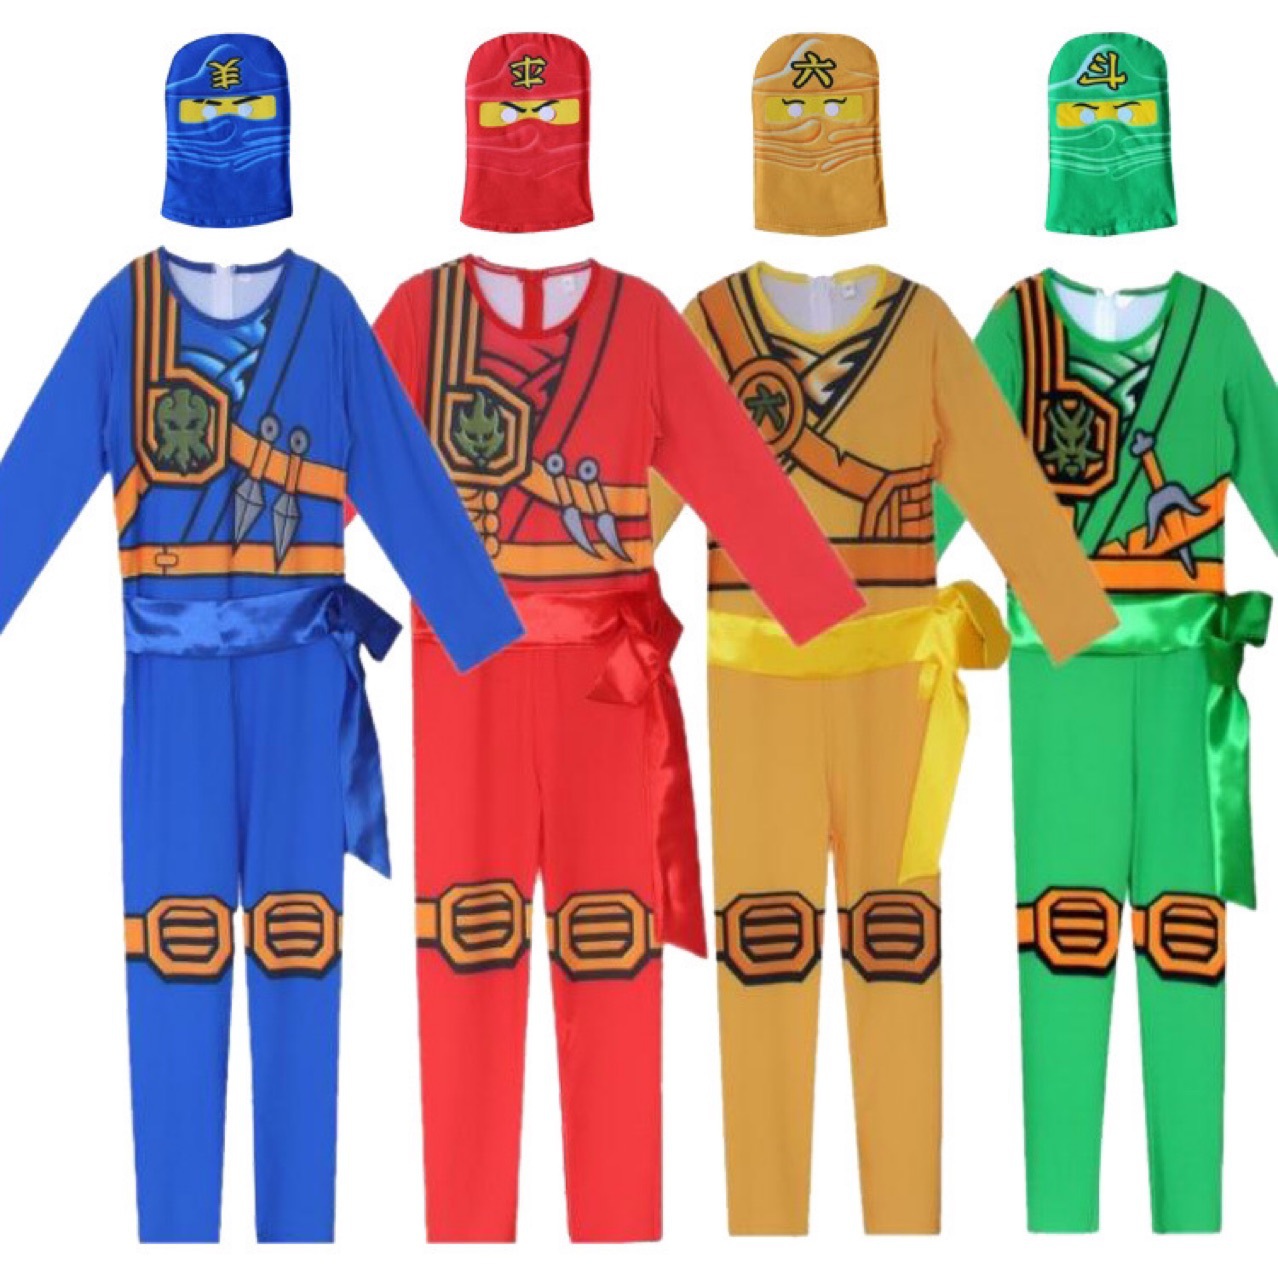 LEGO Ninjago costume children's anime performance costumes Halloween tights children's LEGO ninja costumes